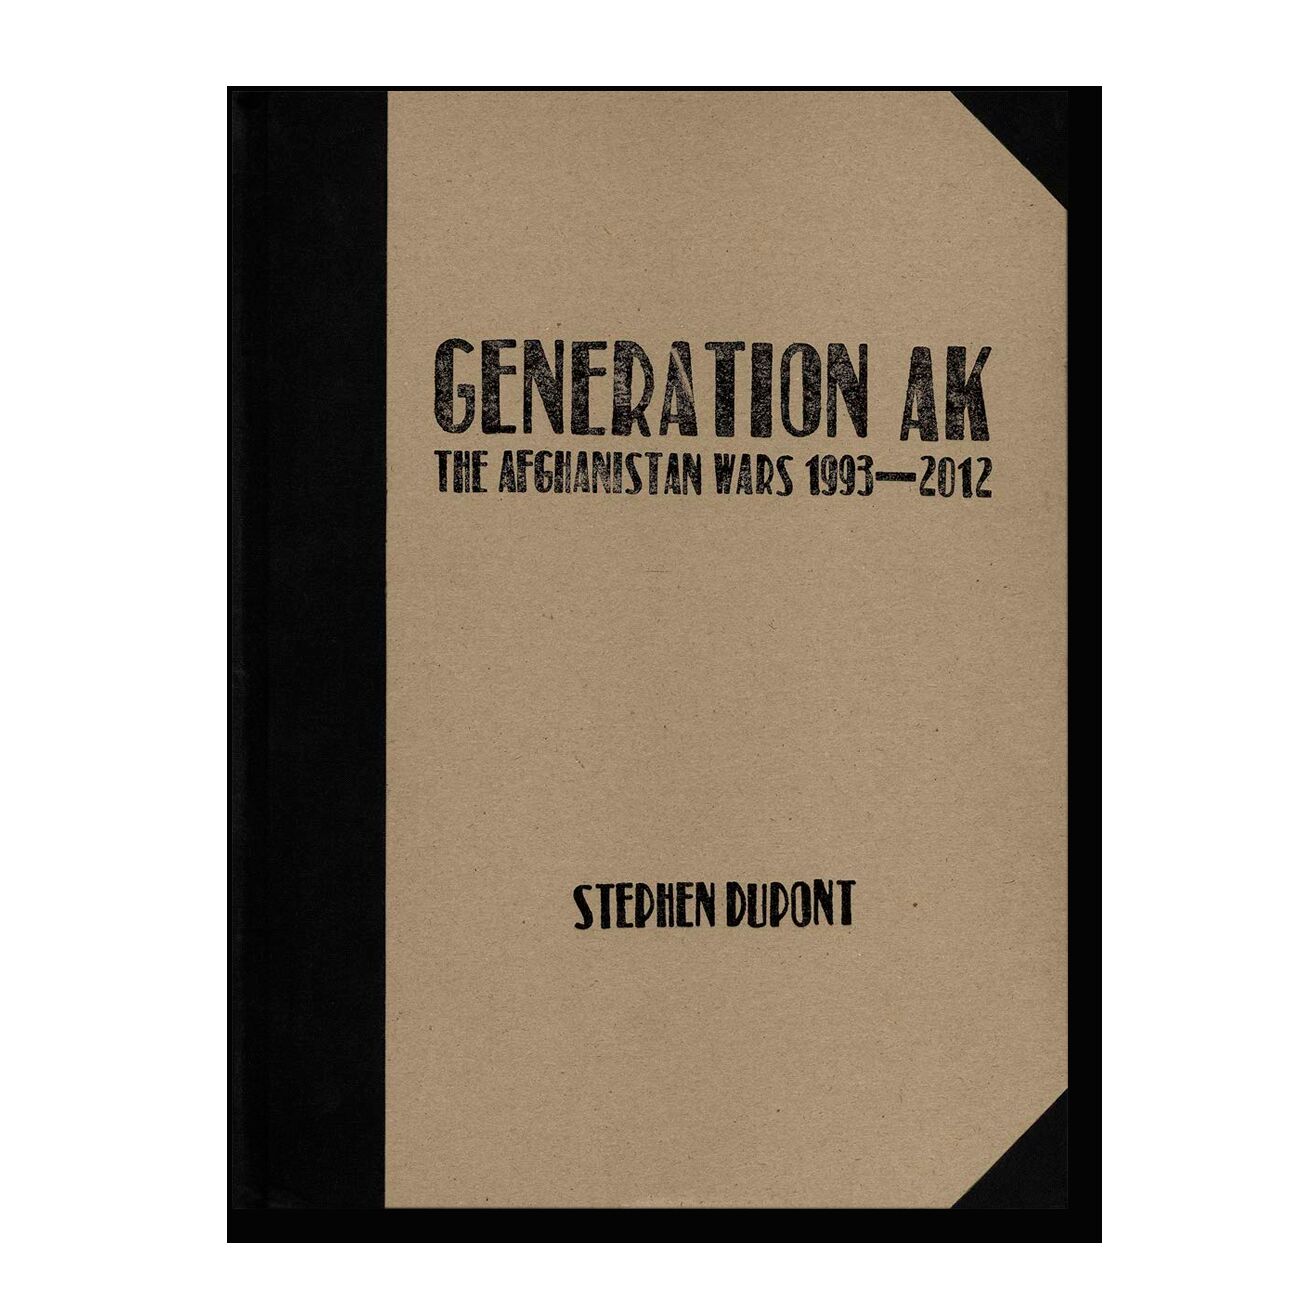 Generation AK: The Afghanistan Wars 1993-2012